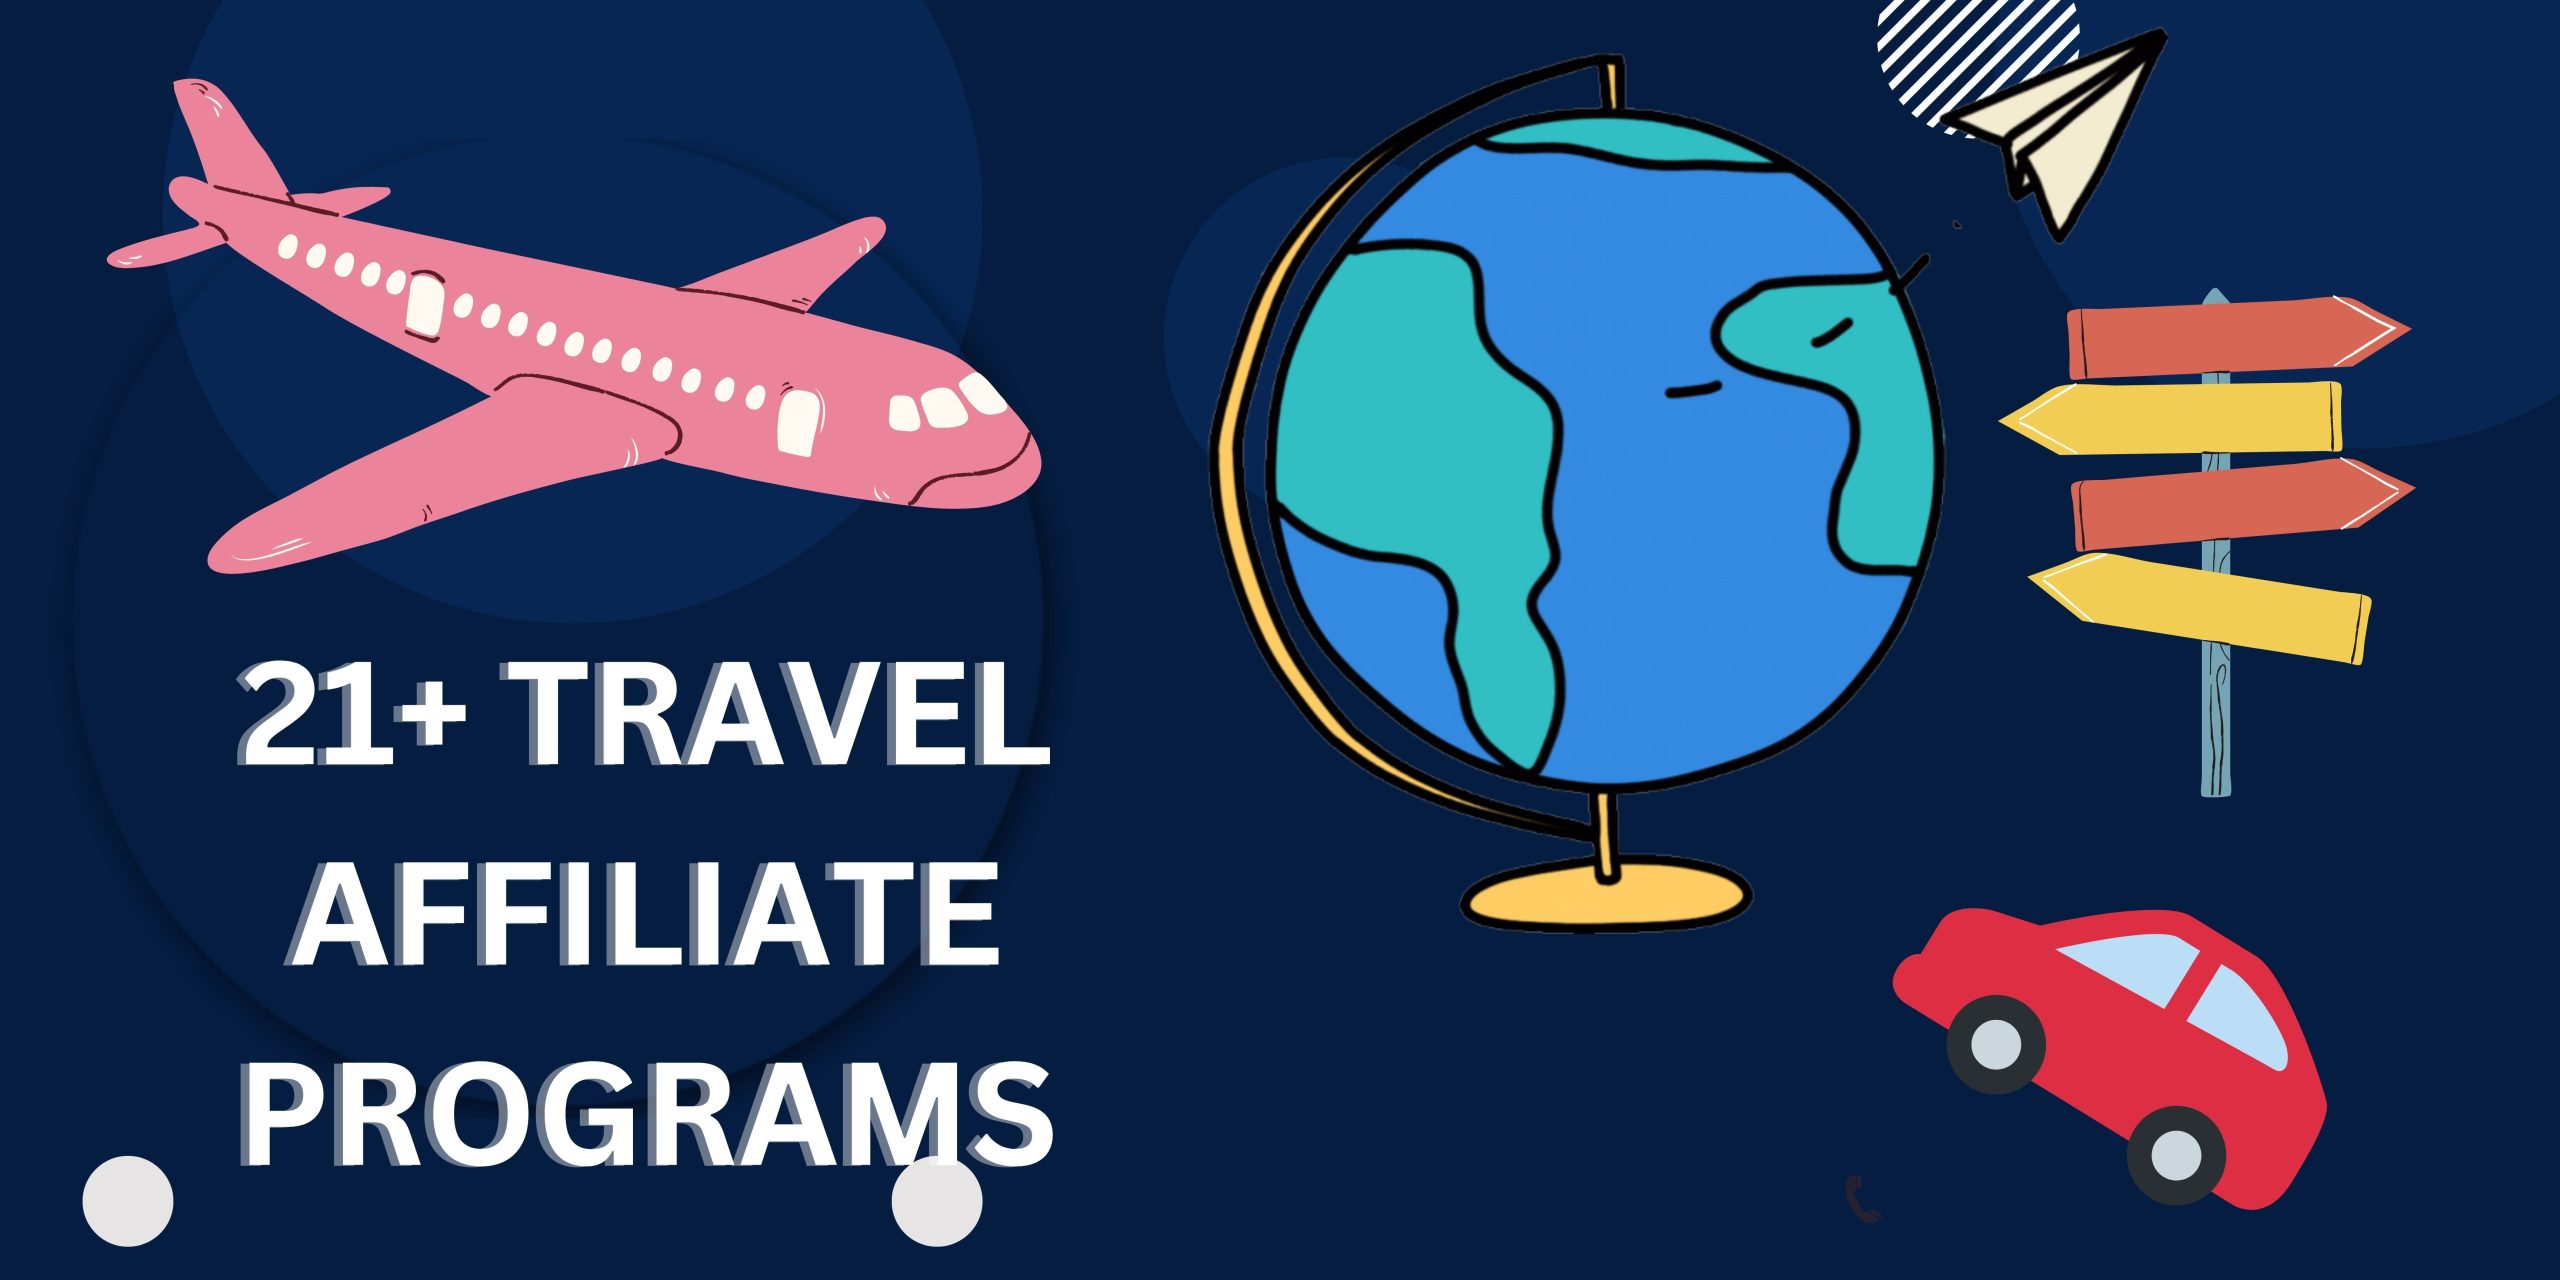 alt="List of 22 Travel Affiliate Programs for bloggers"